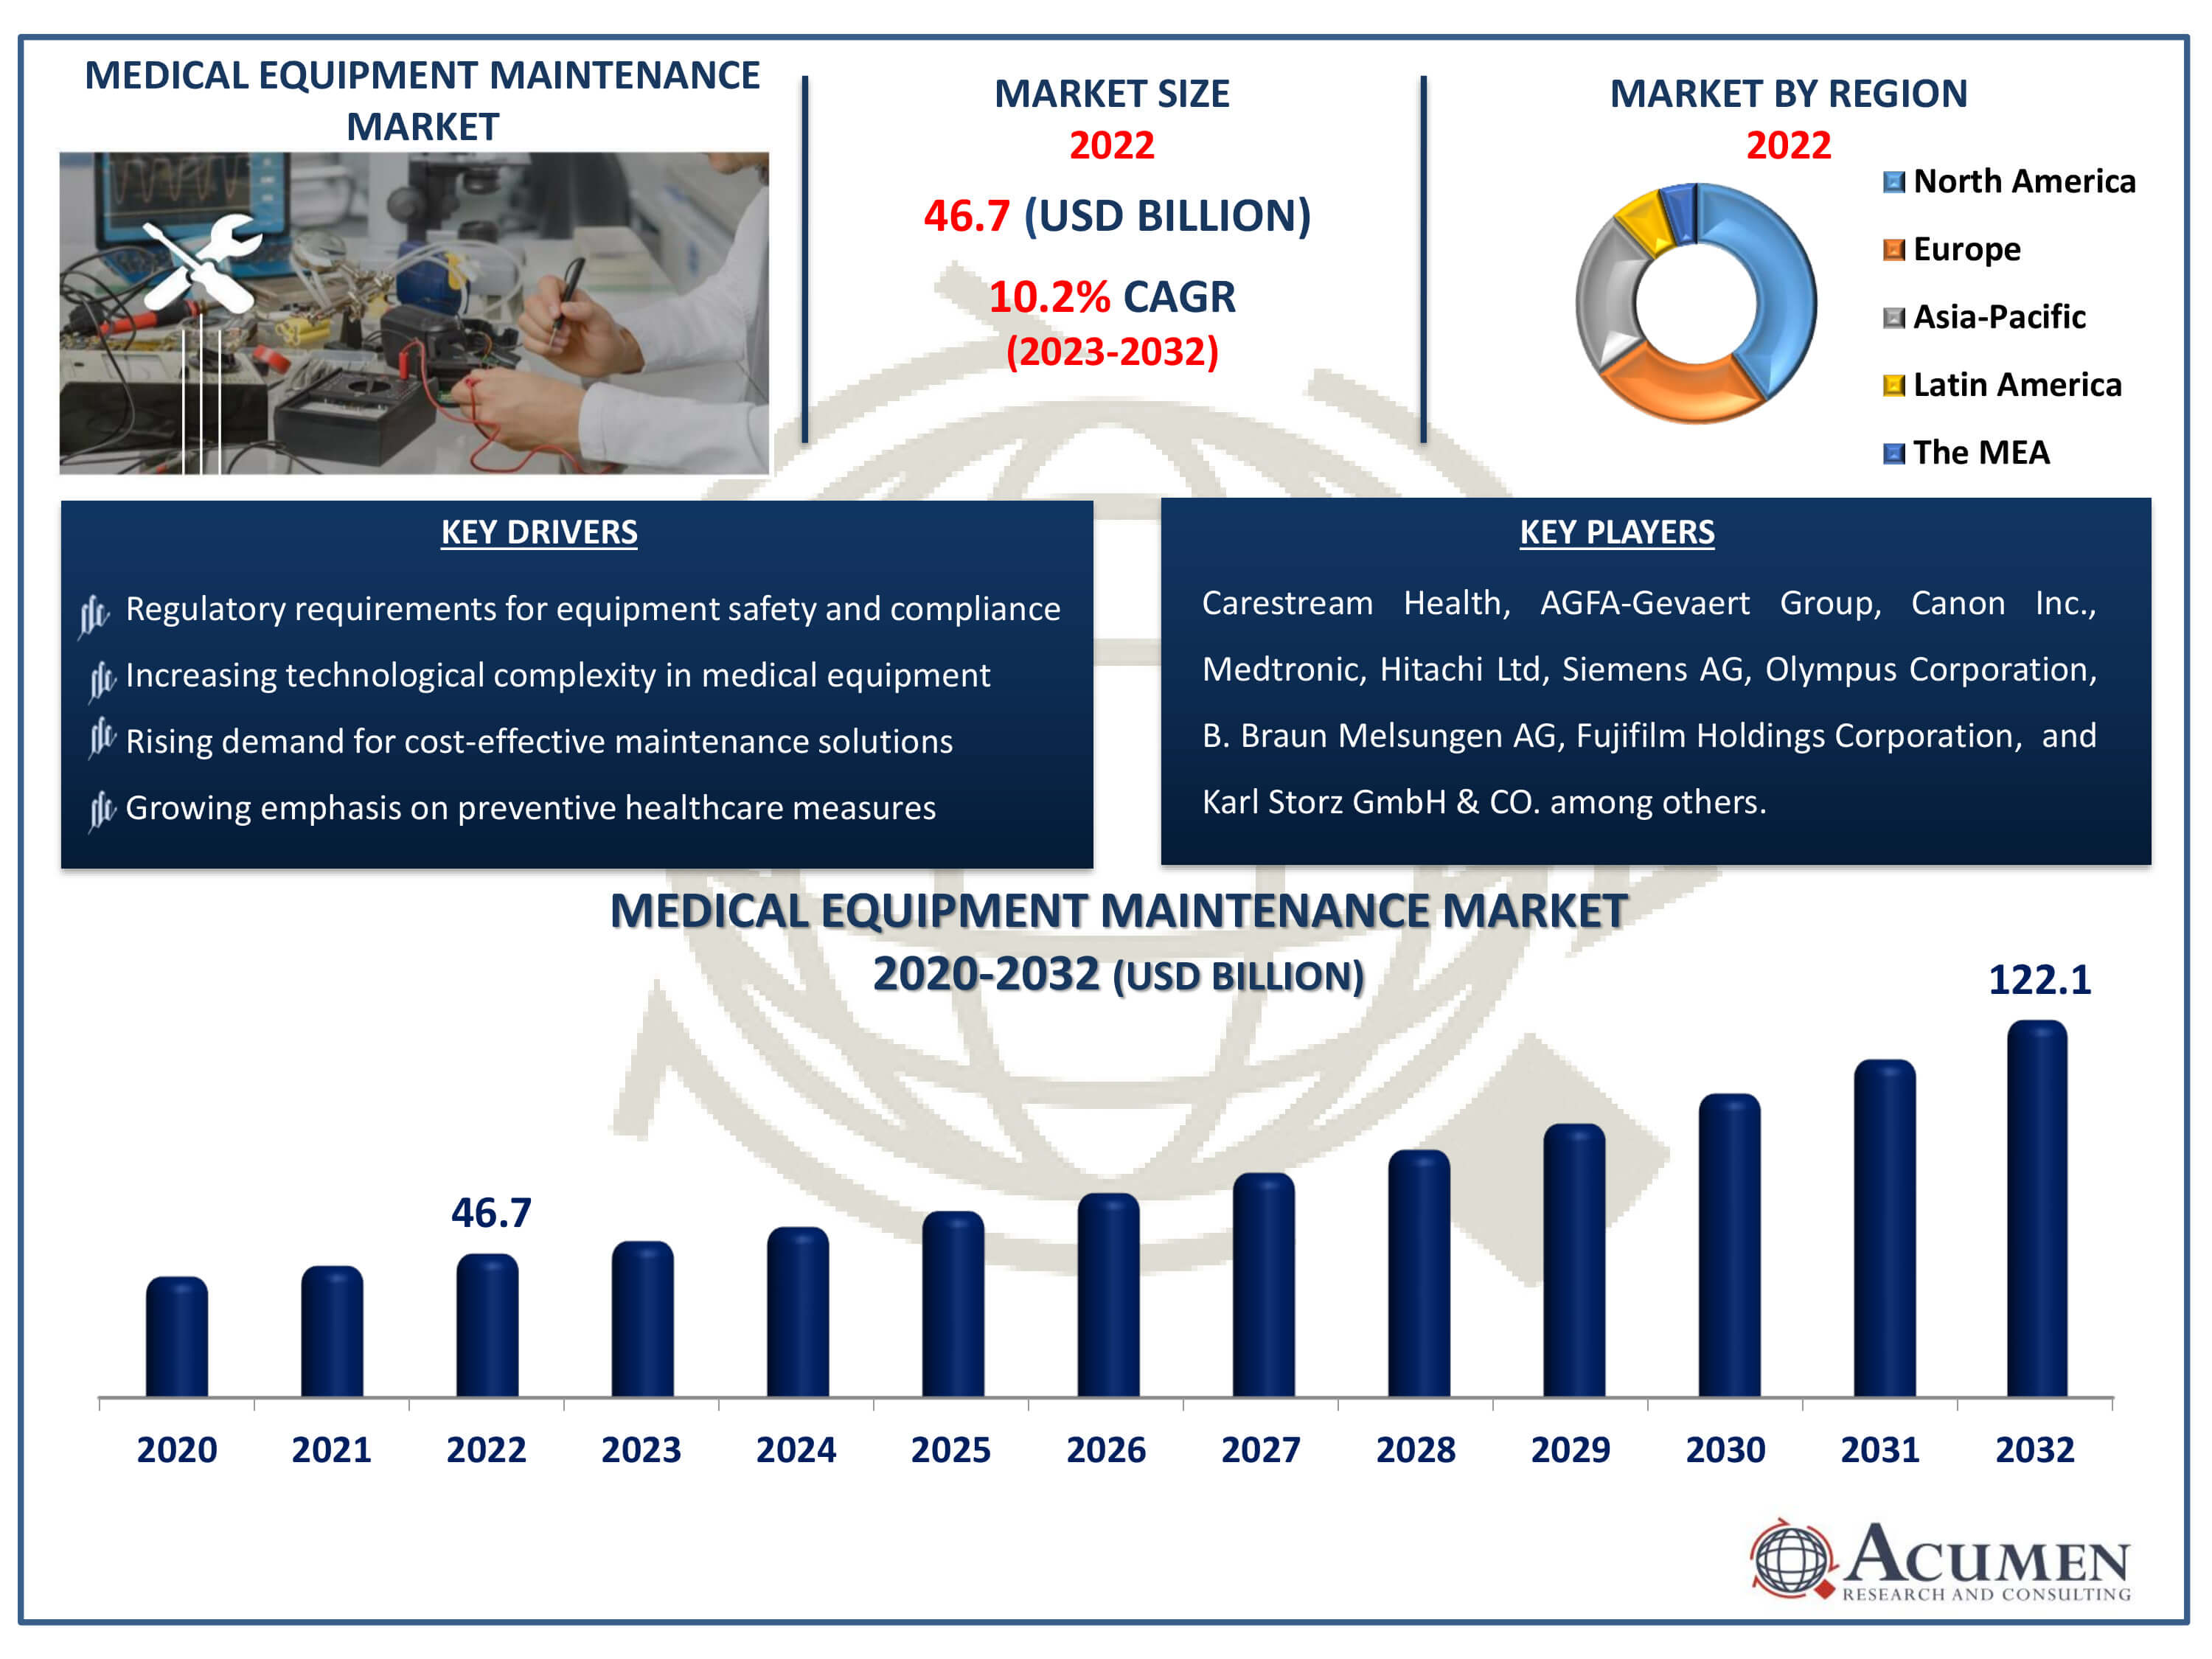 Medical Equipment Maintenance Market Dynamics